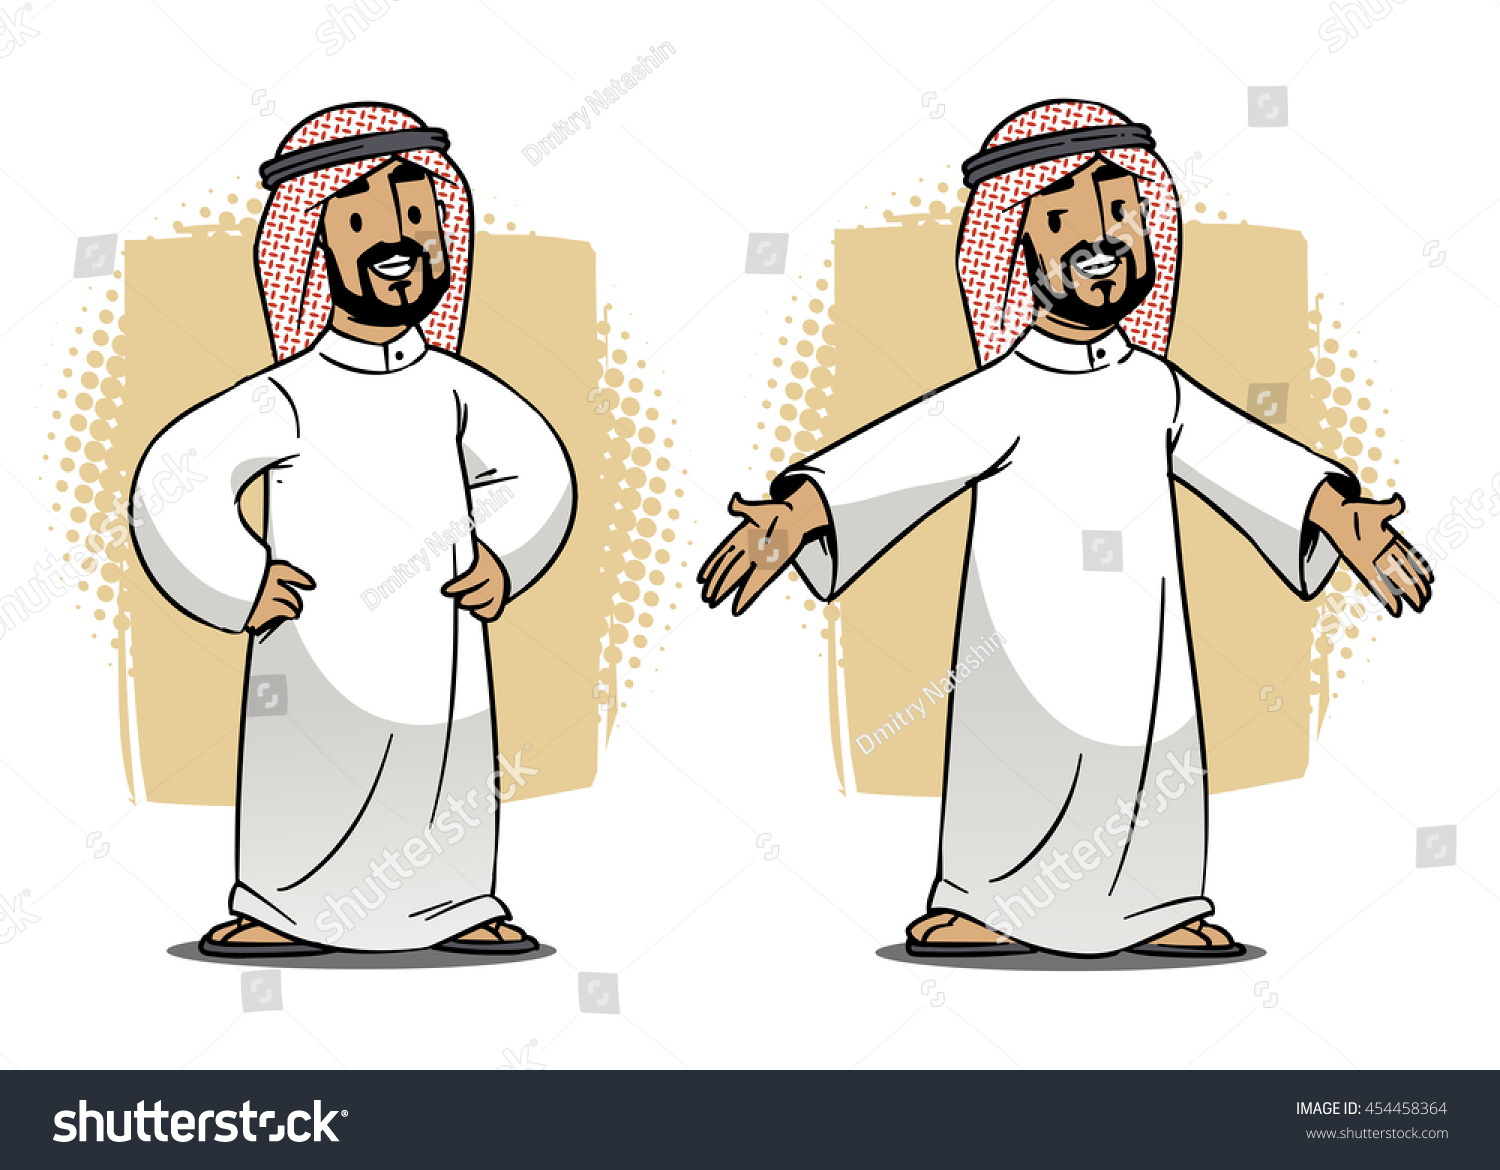 Arab Businessman Cartoon Character: เวกเตอร์สต็อก (ปลอดค่าลิขสิทธิ์